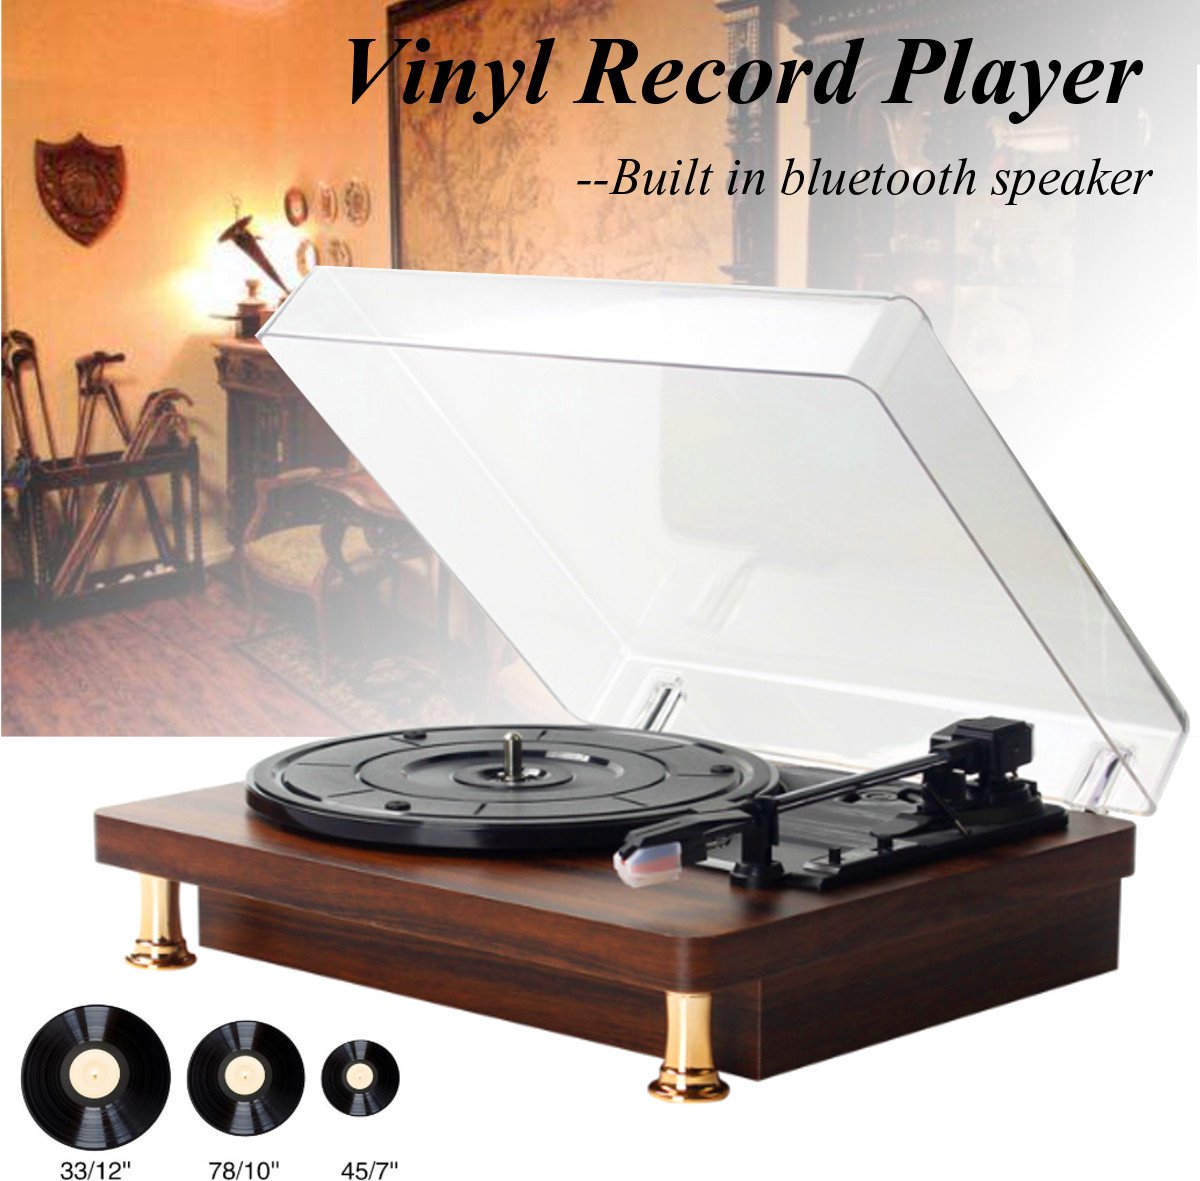 Platenspeler Bluetooth - Vinyl-1305A - Retro platenspeler met speakers ingebouwd